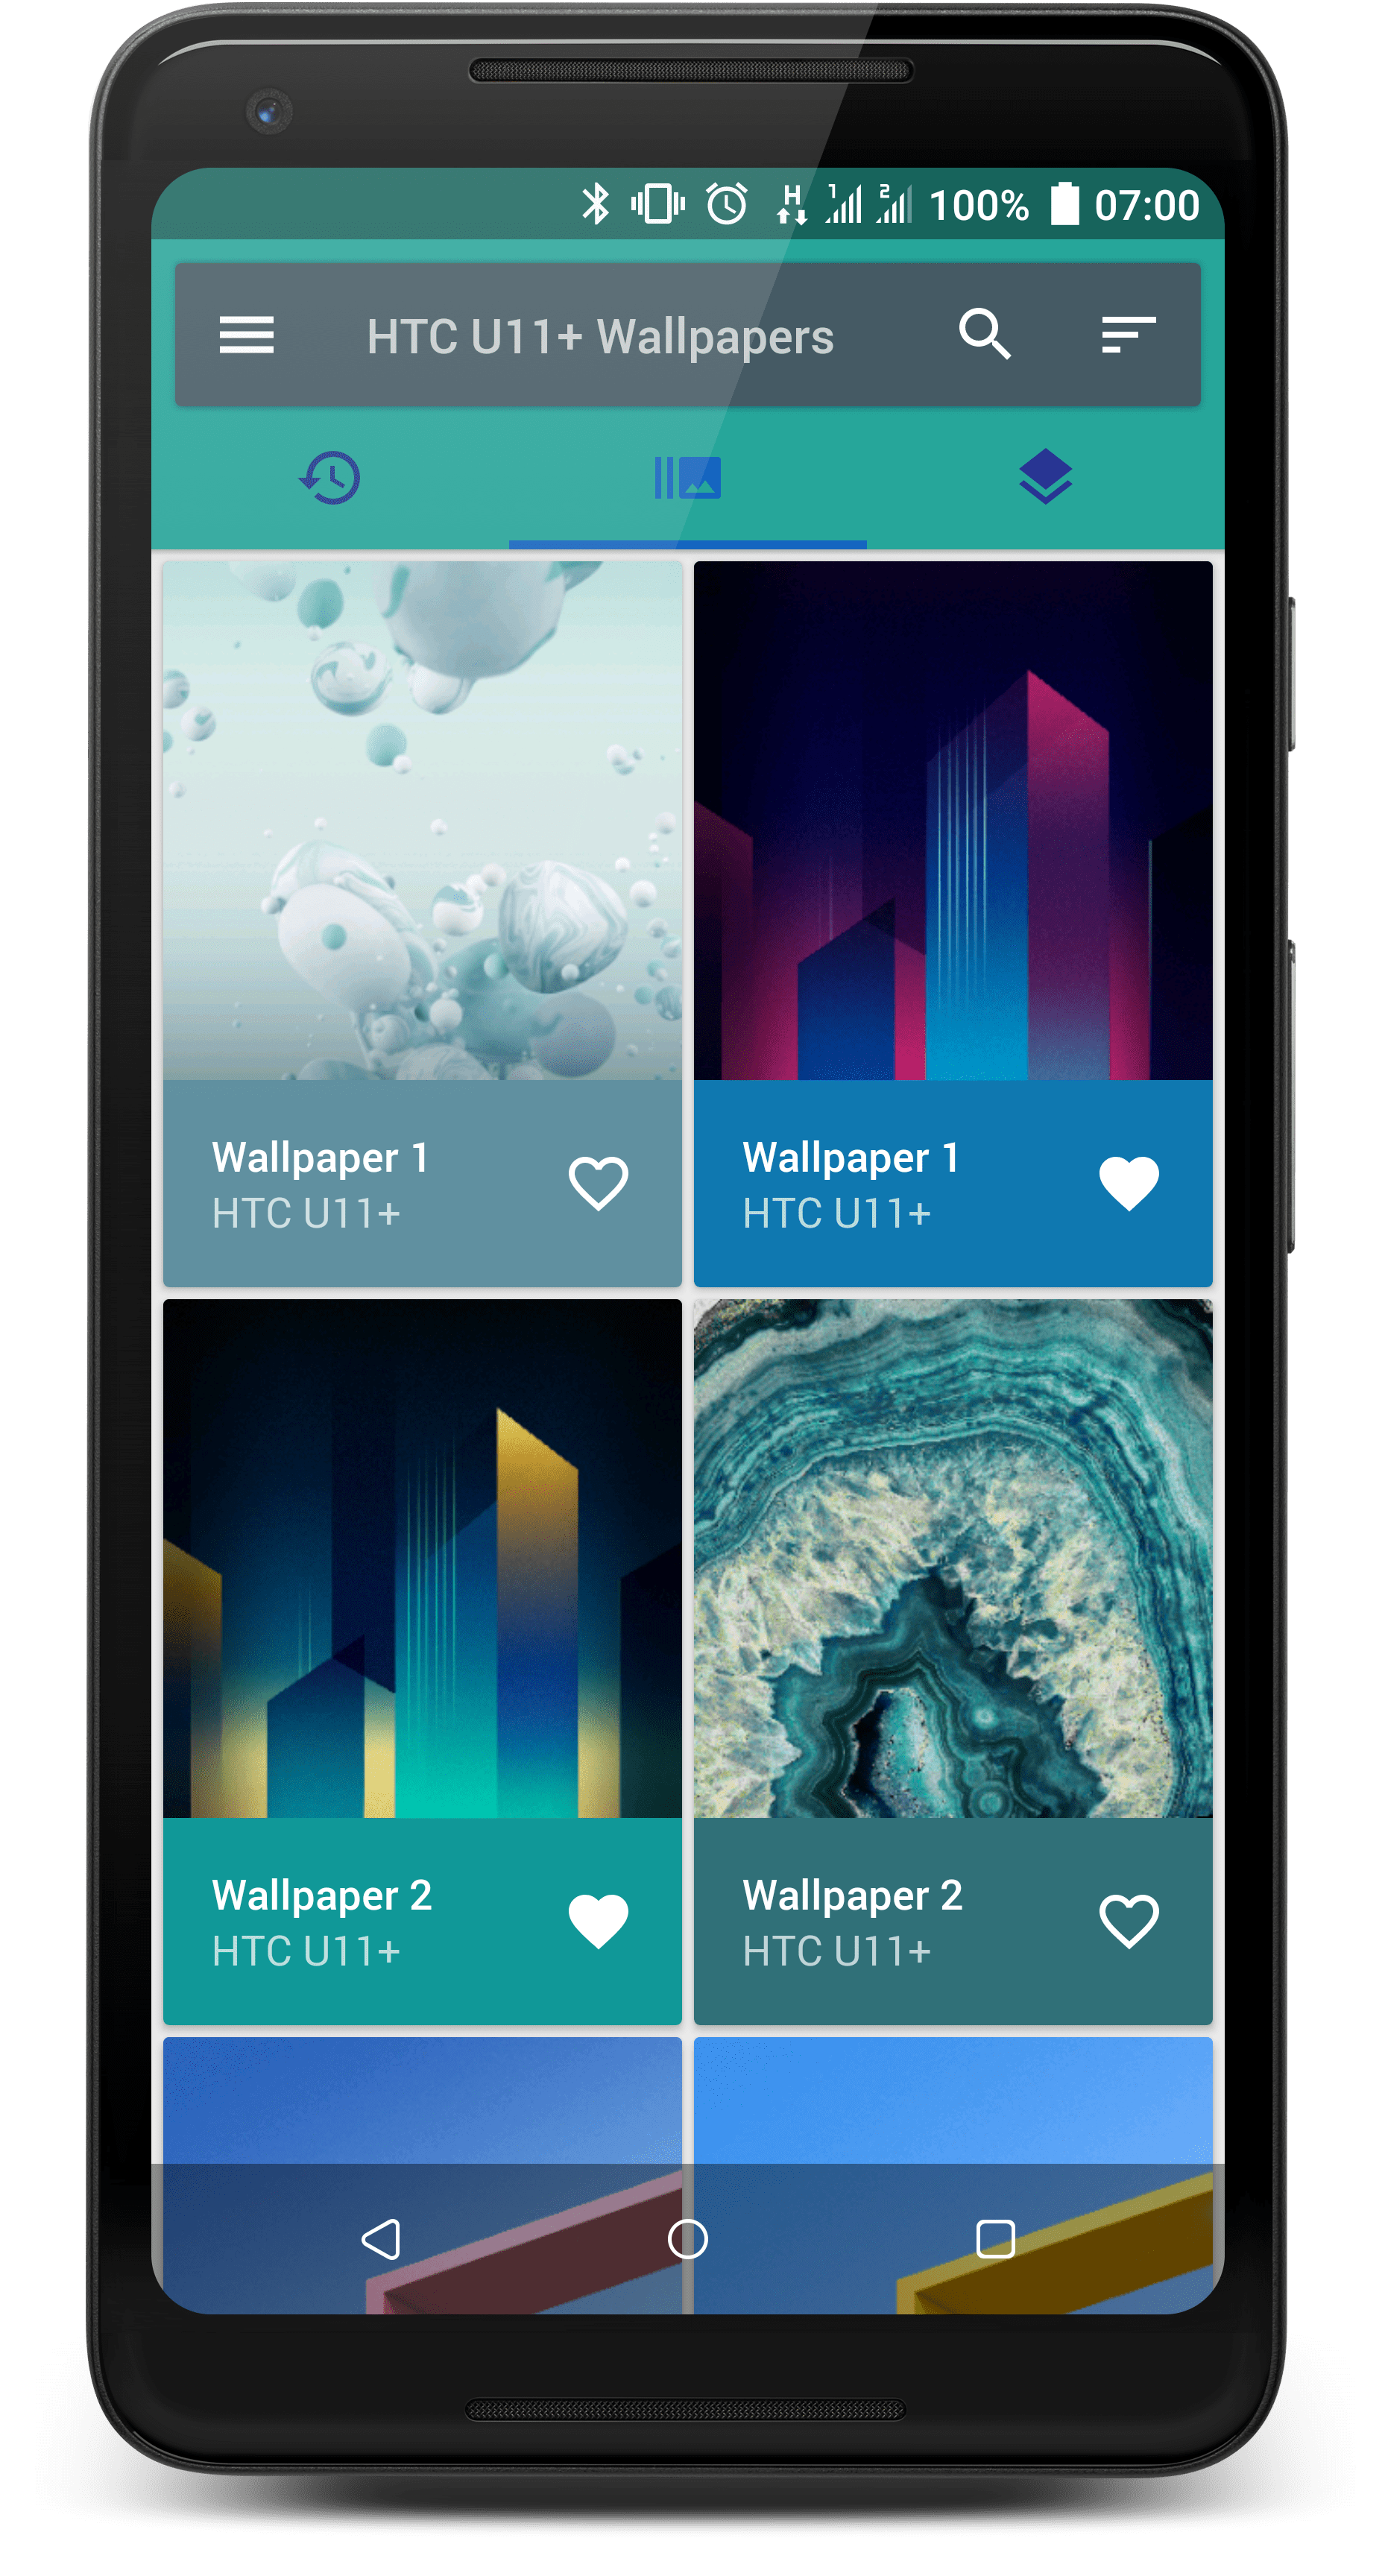 HTC U11+ Wallpapers